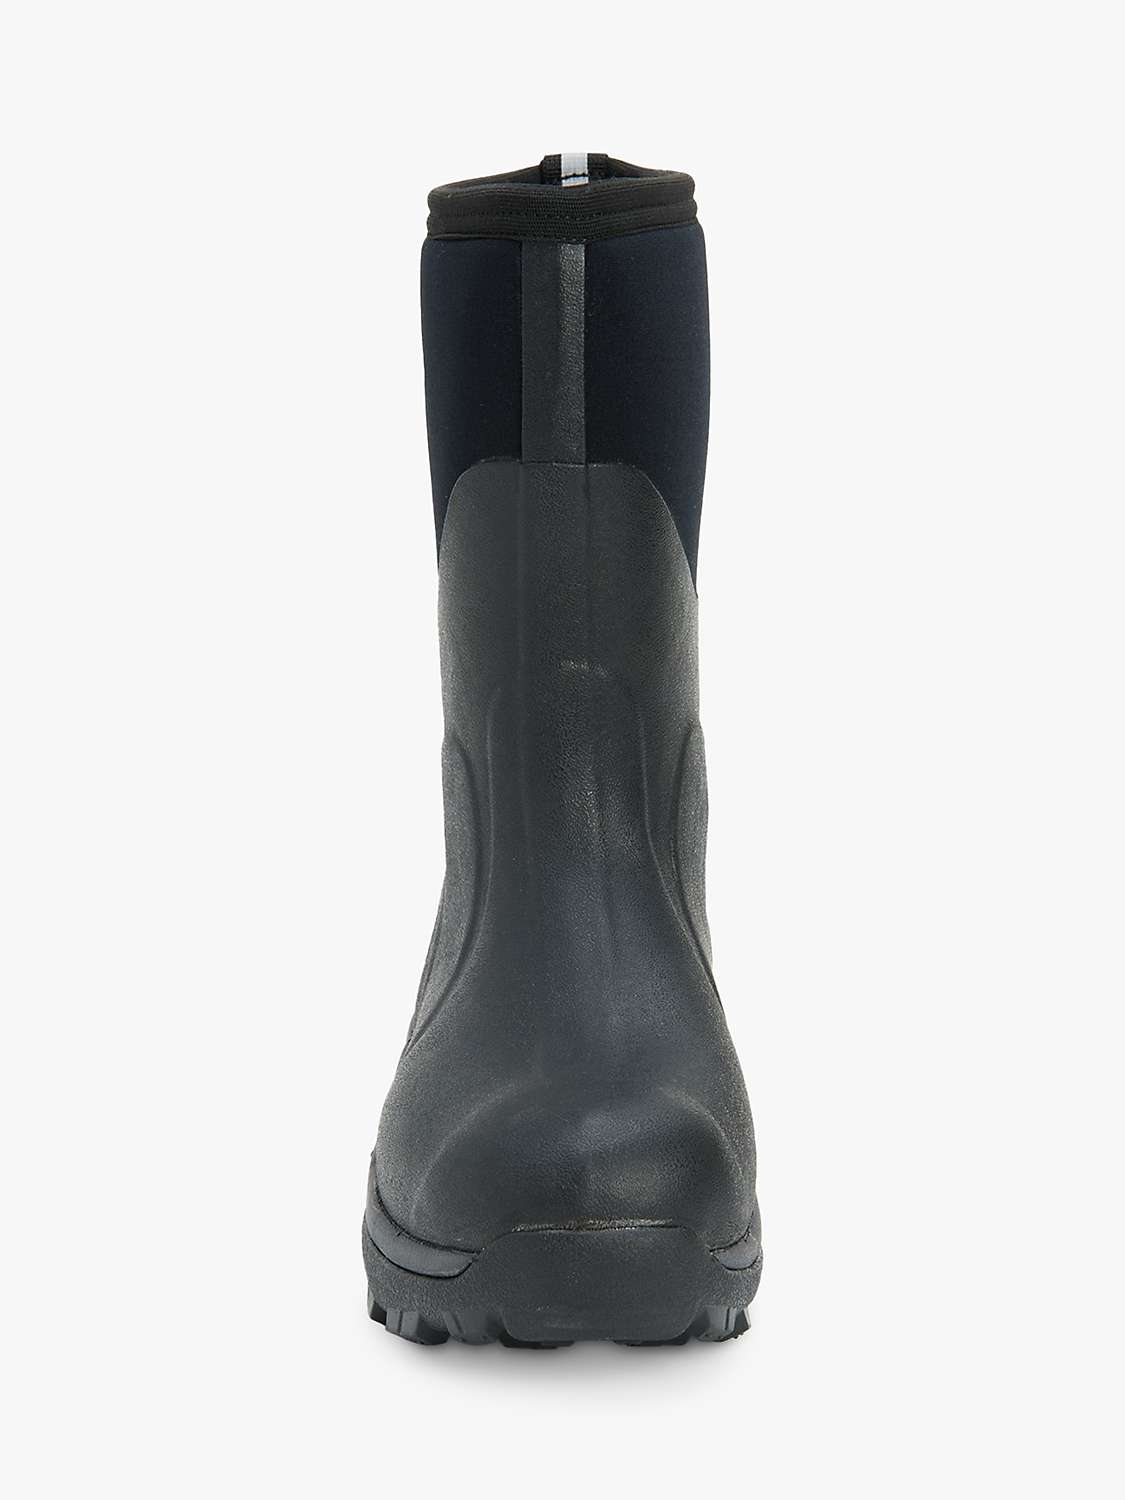 Buy Muck Arctic Sport Pull On Short Wellington Boots, Black Online at johnlewis.com